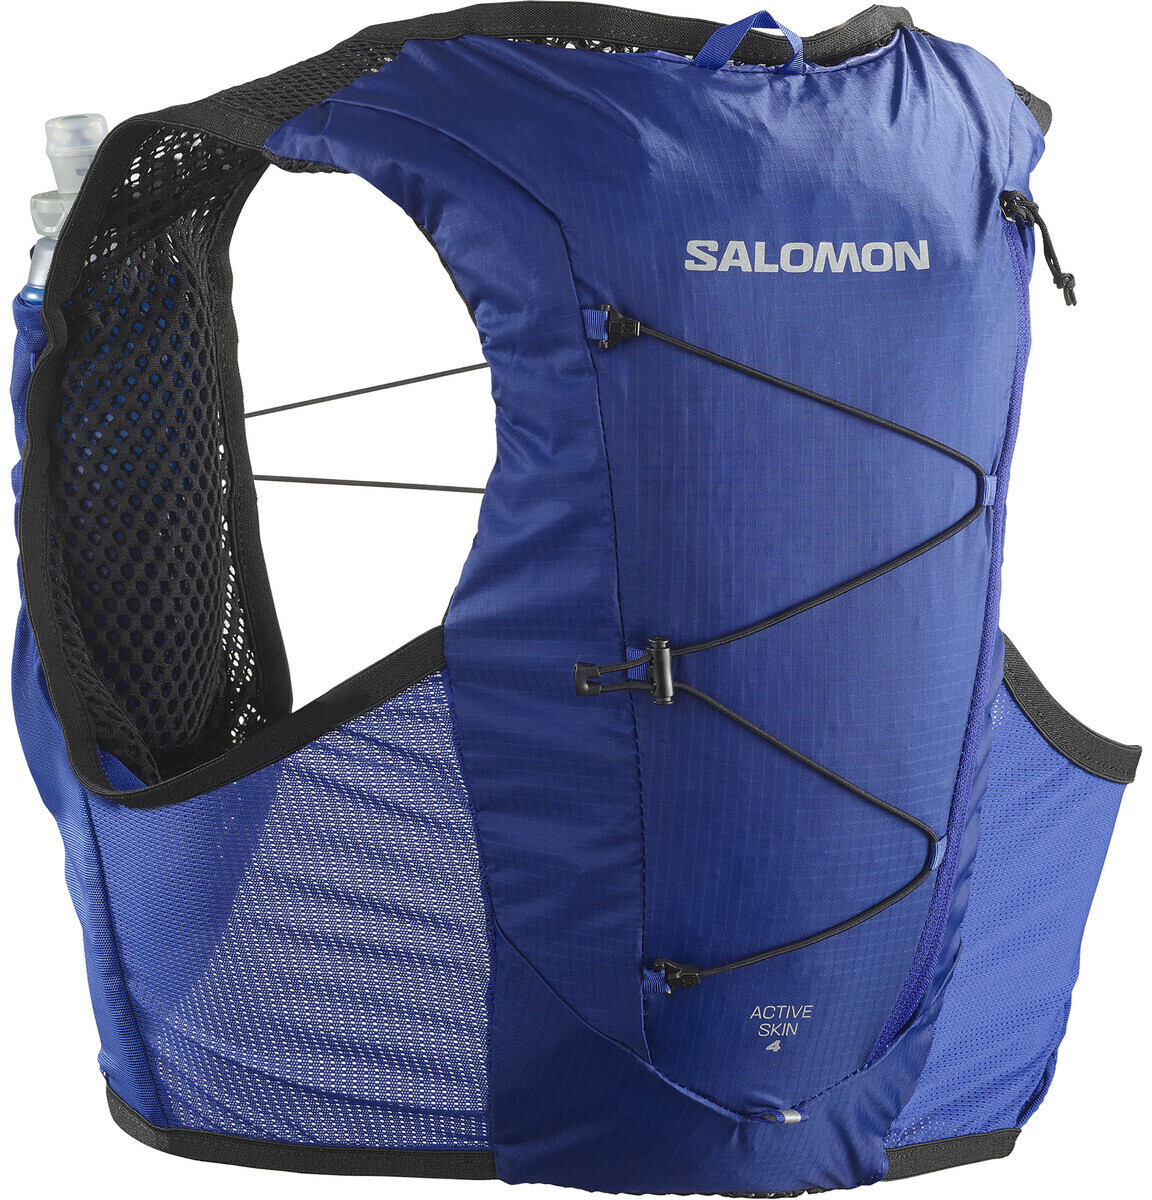 Salomon Active Skin 8 Set - Nautical Blue M / M